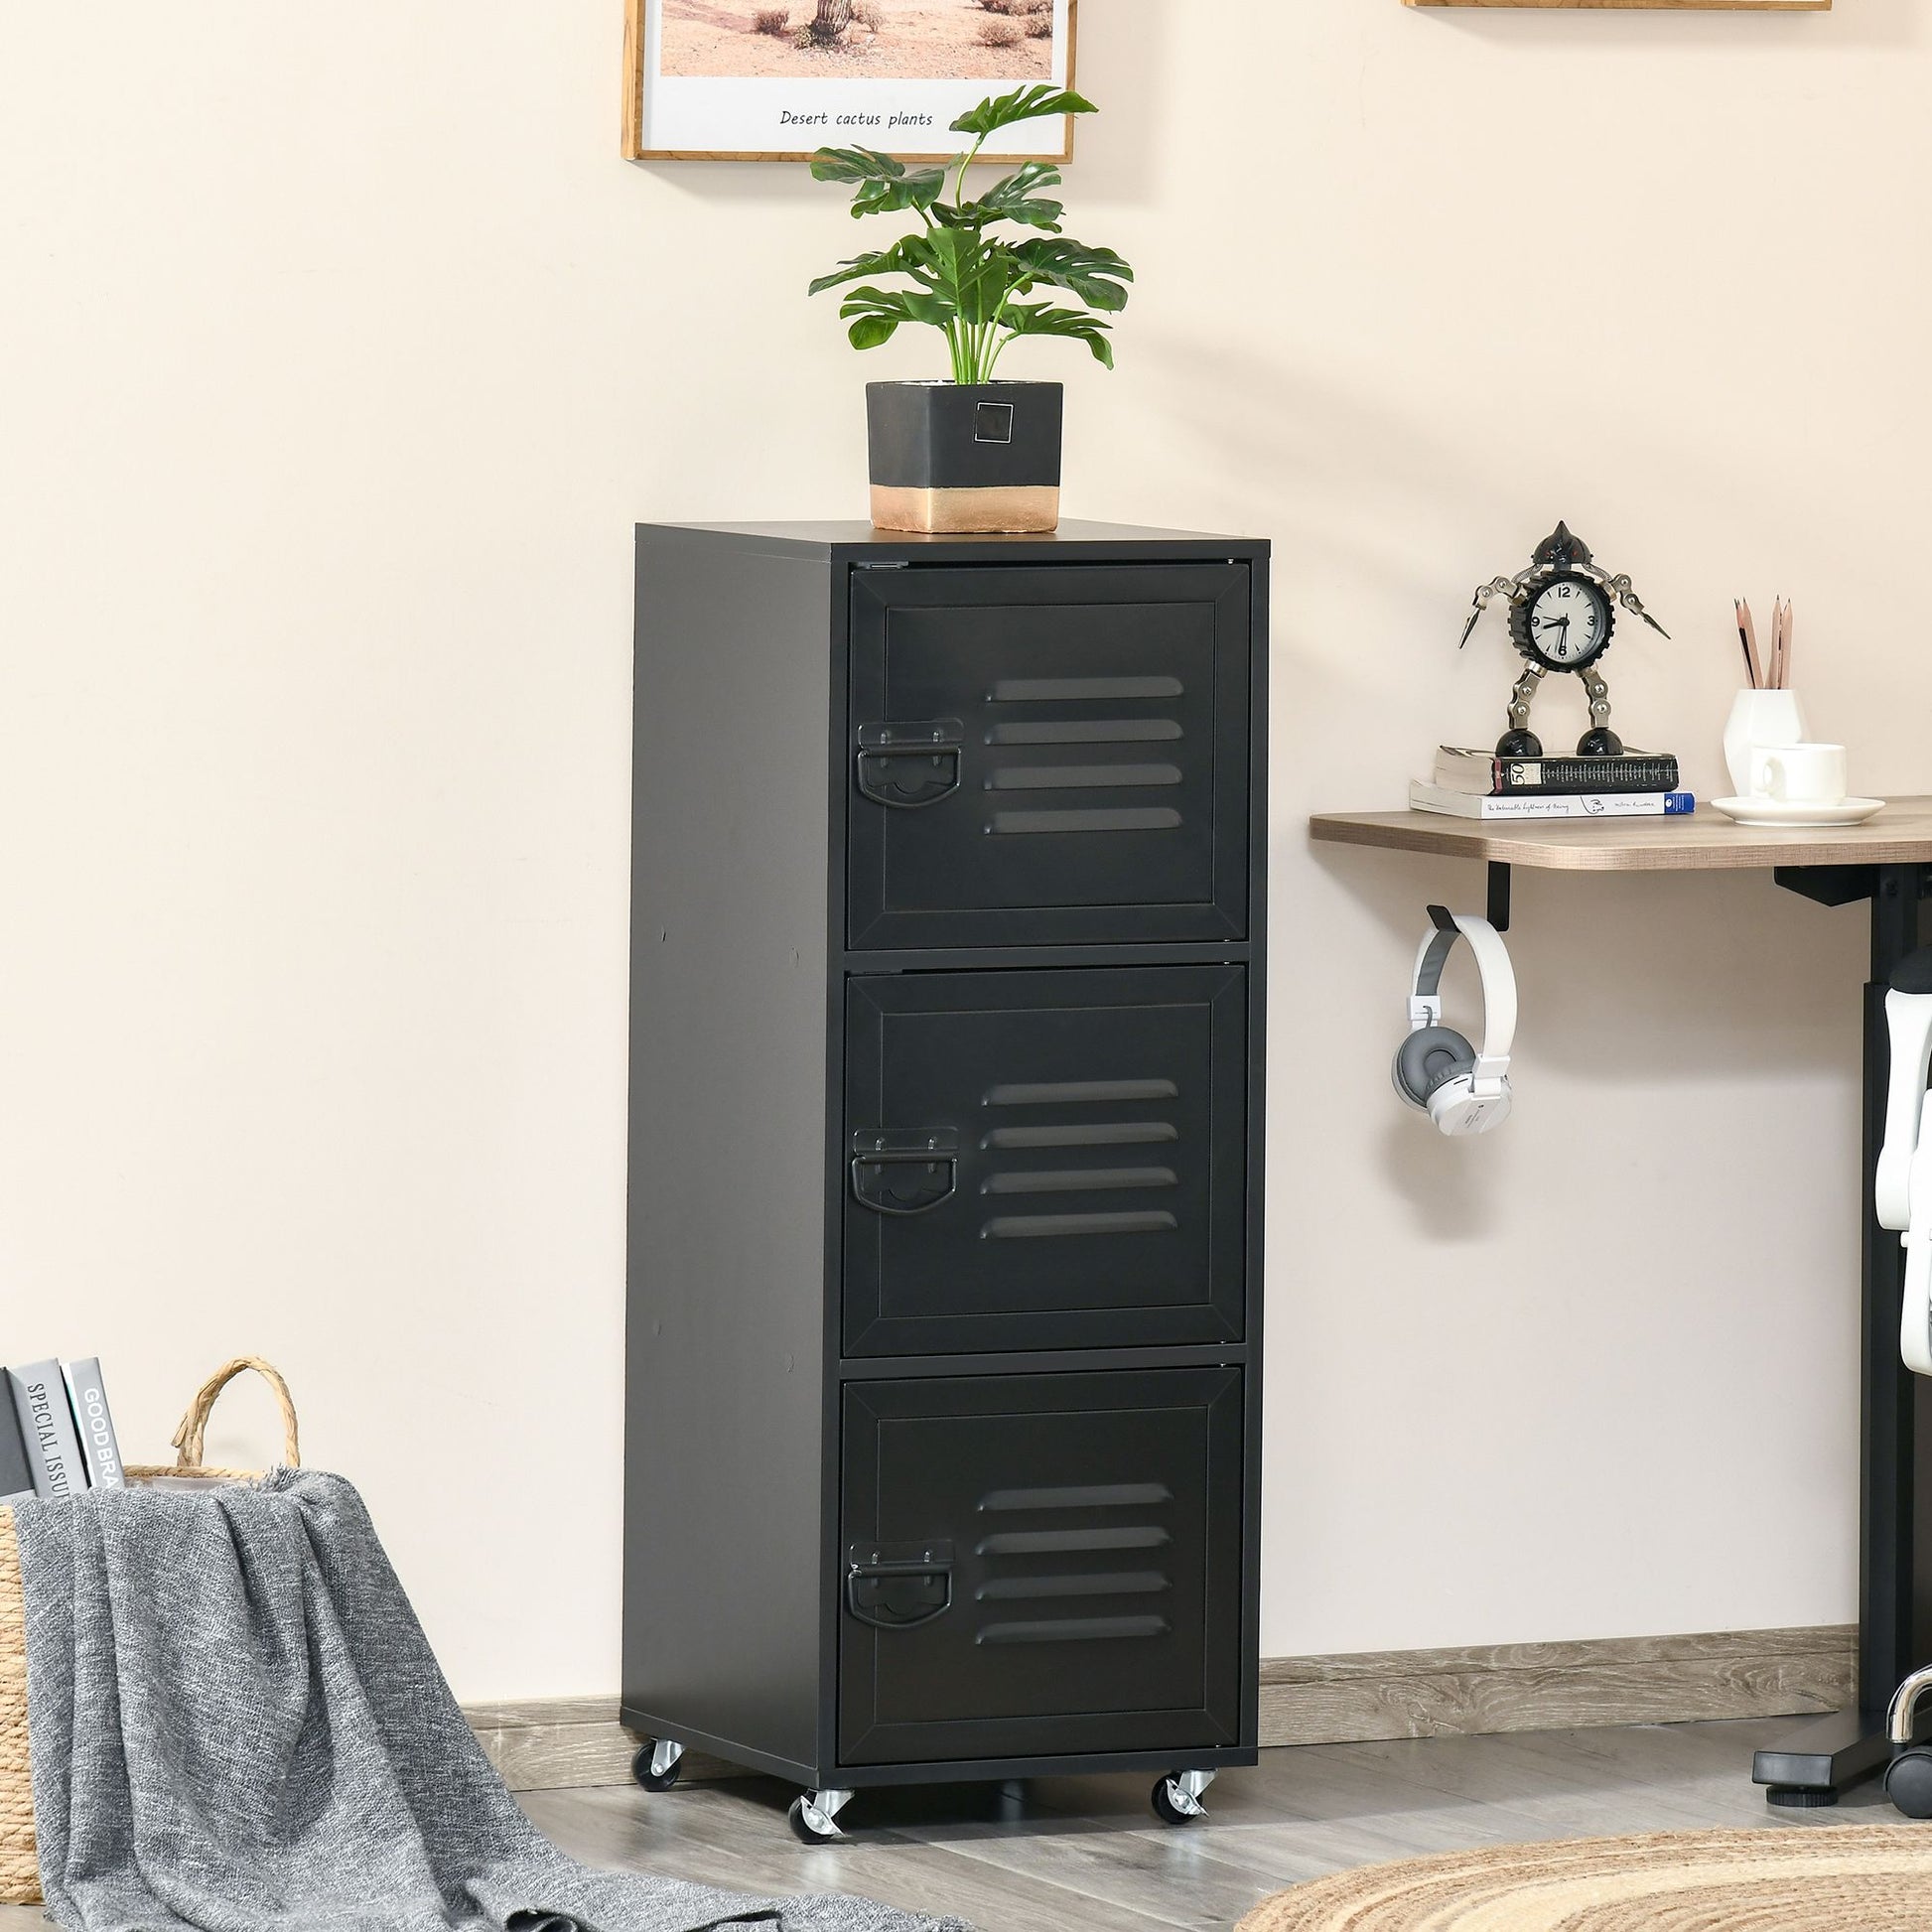 ProperAV Extra Mobile 3-Tier Storage Filing Cabinet with Wheels & Metal Doors - Black - maplin.co.uk